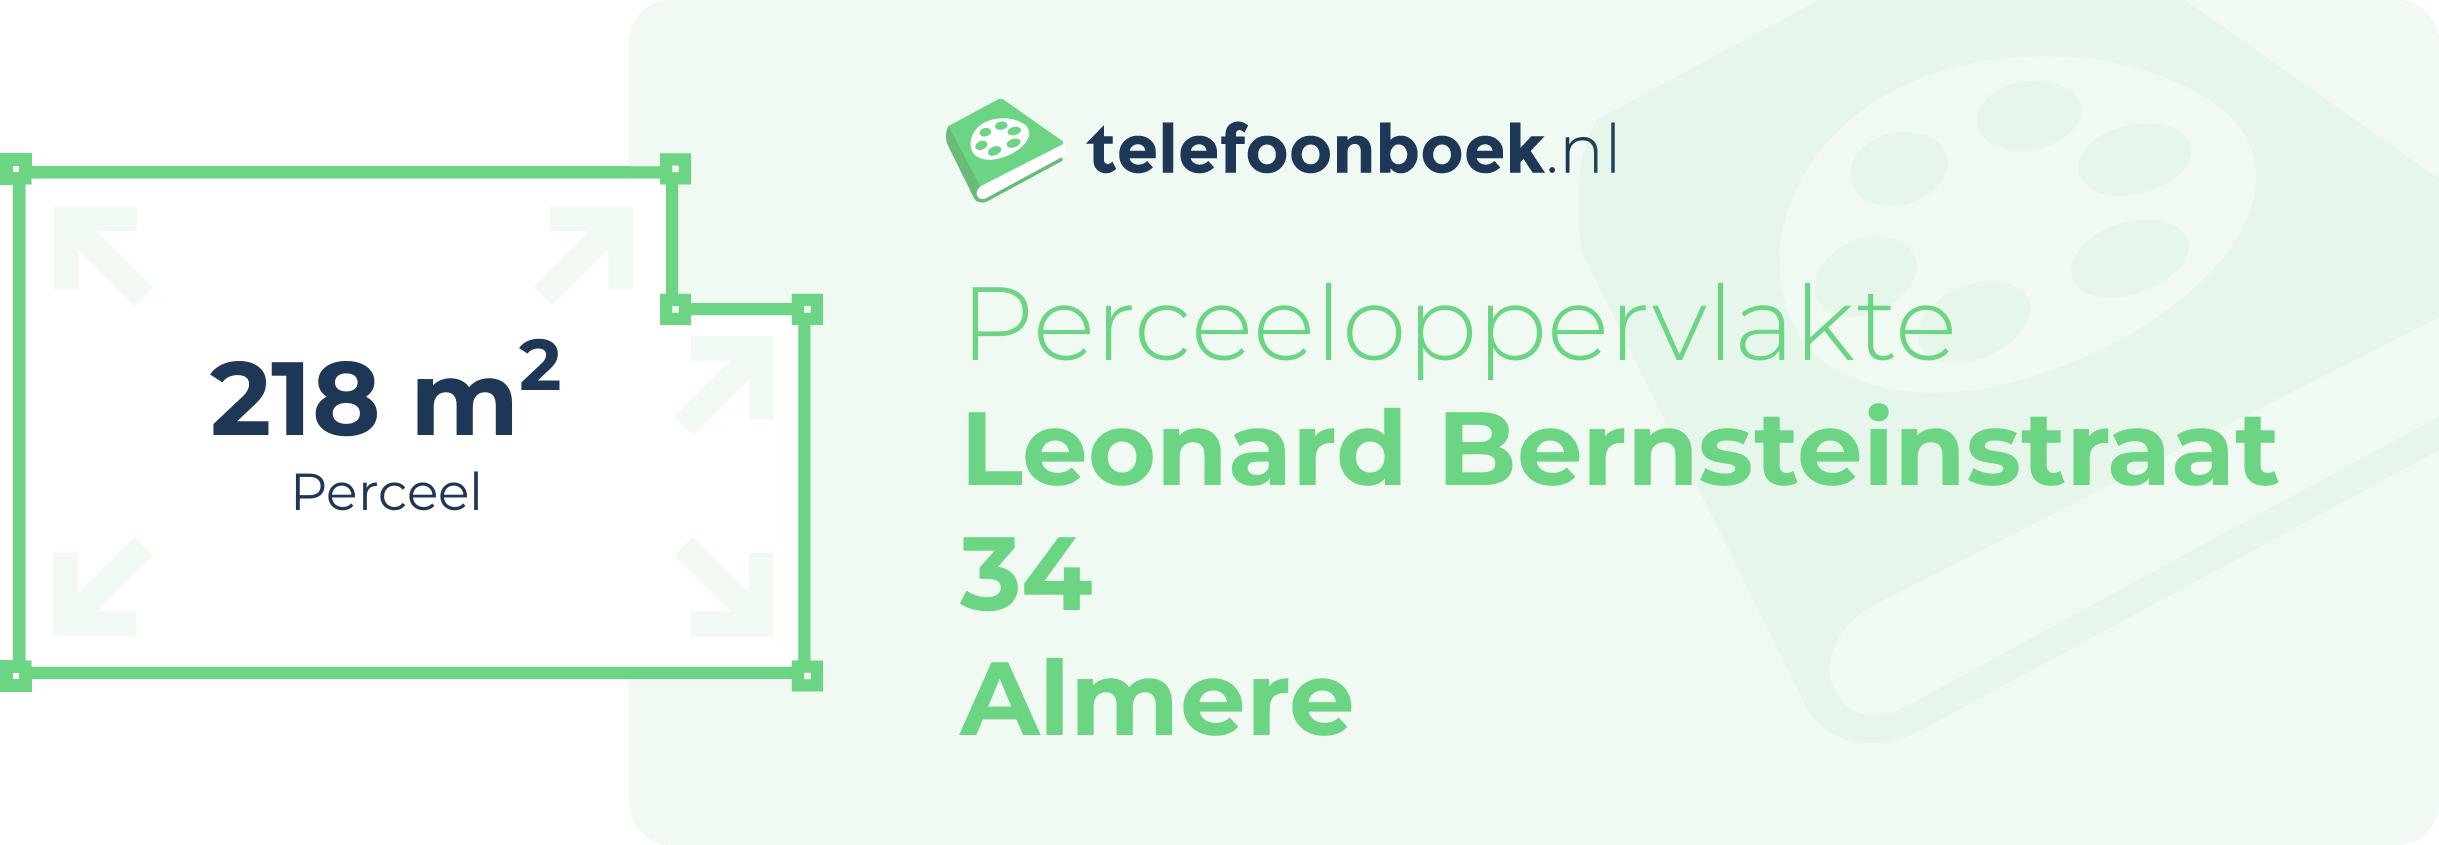 Perceeloppervlakte Leonard Bernsteinstraat 34 Almere